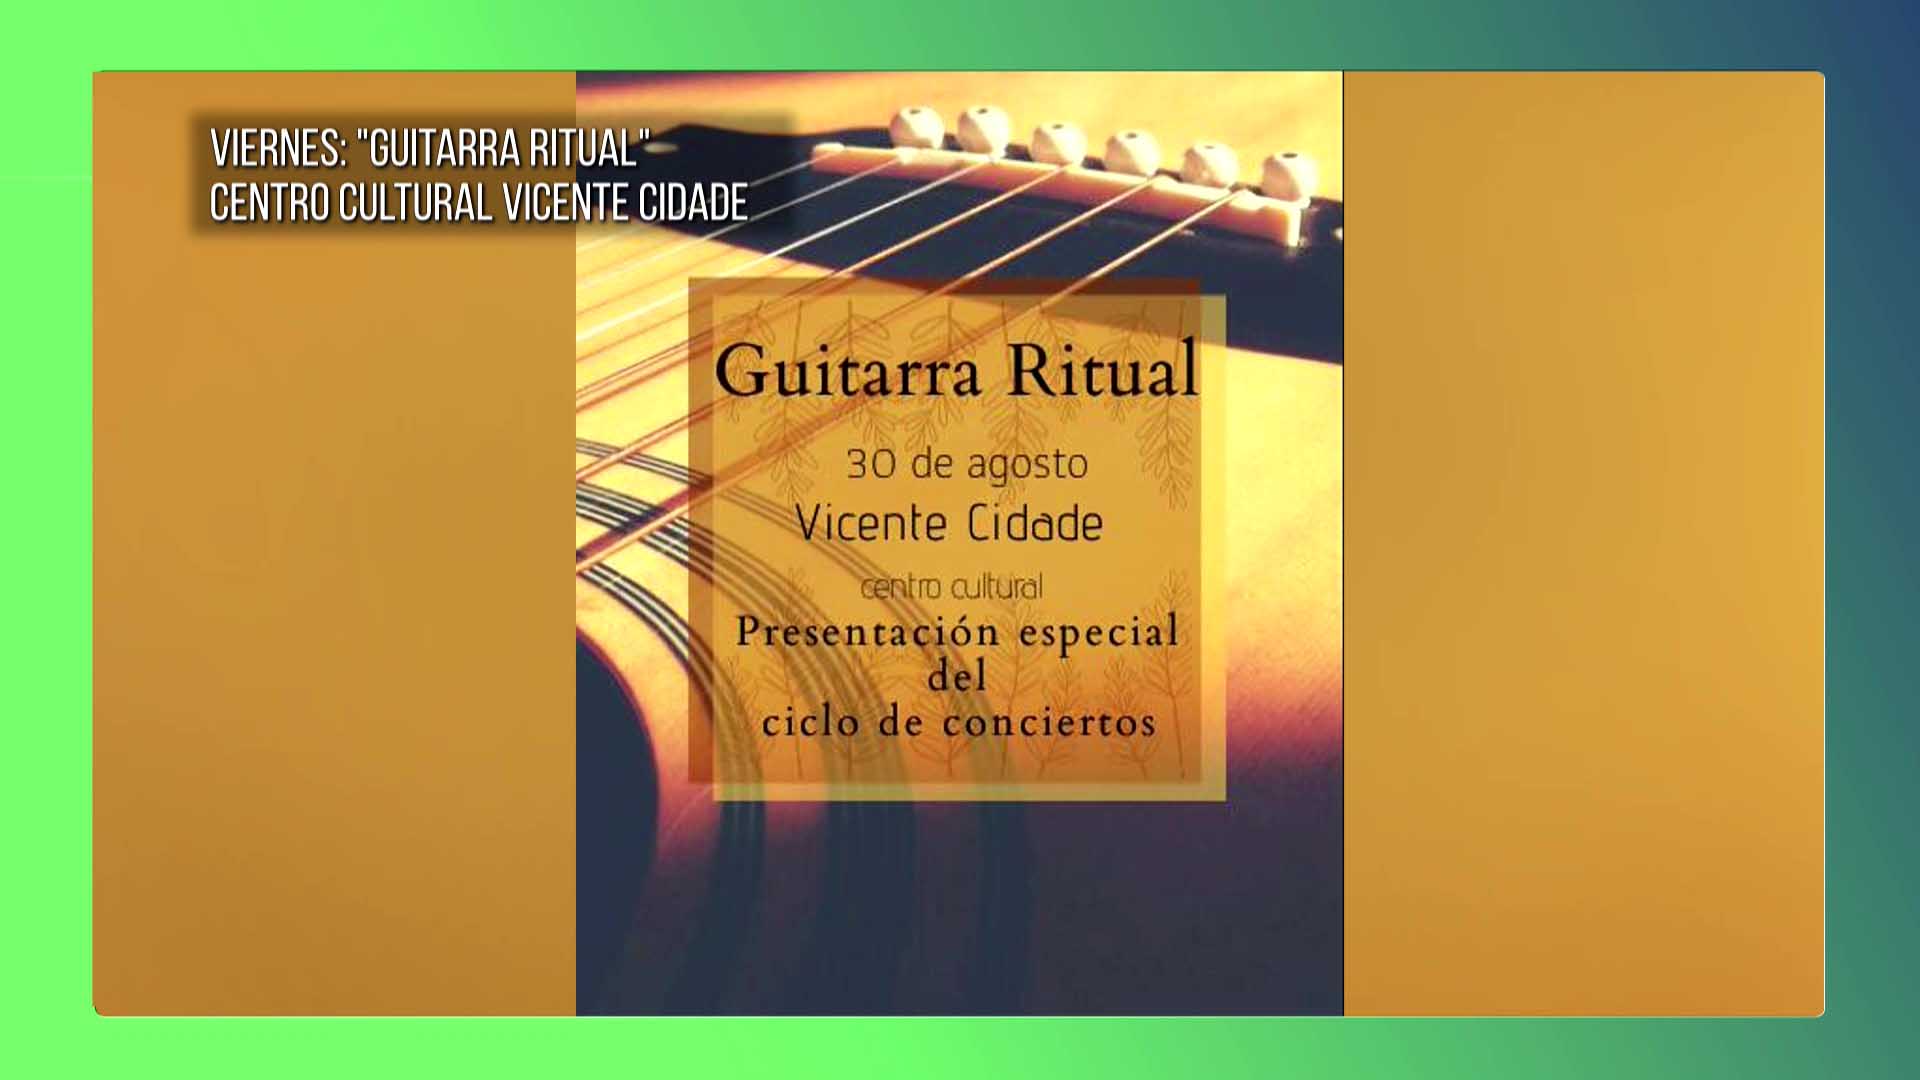 Guía de shows: “Guitarras Ritual, Trío Da Capo en Oberá, documental Tres Fronteras en el Imax”